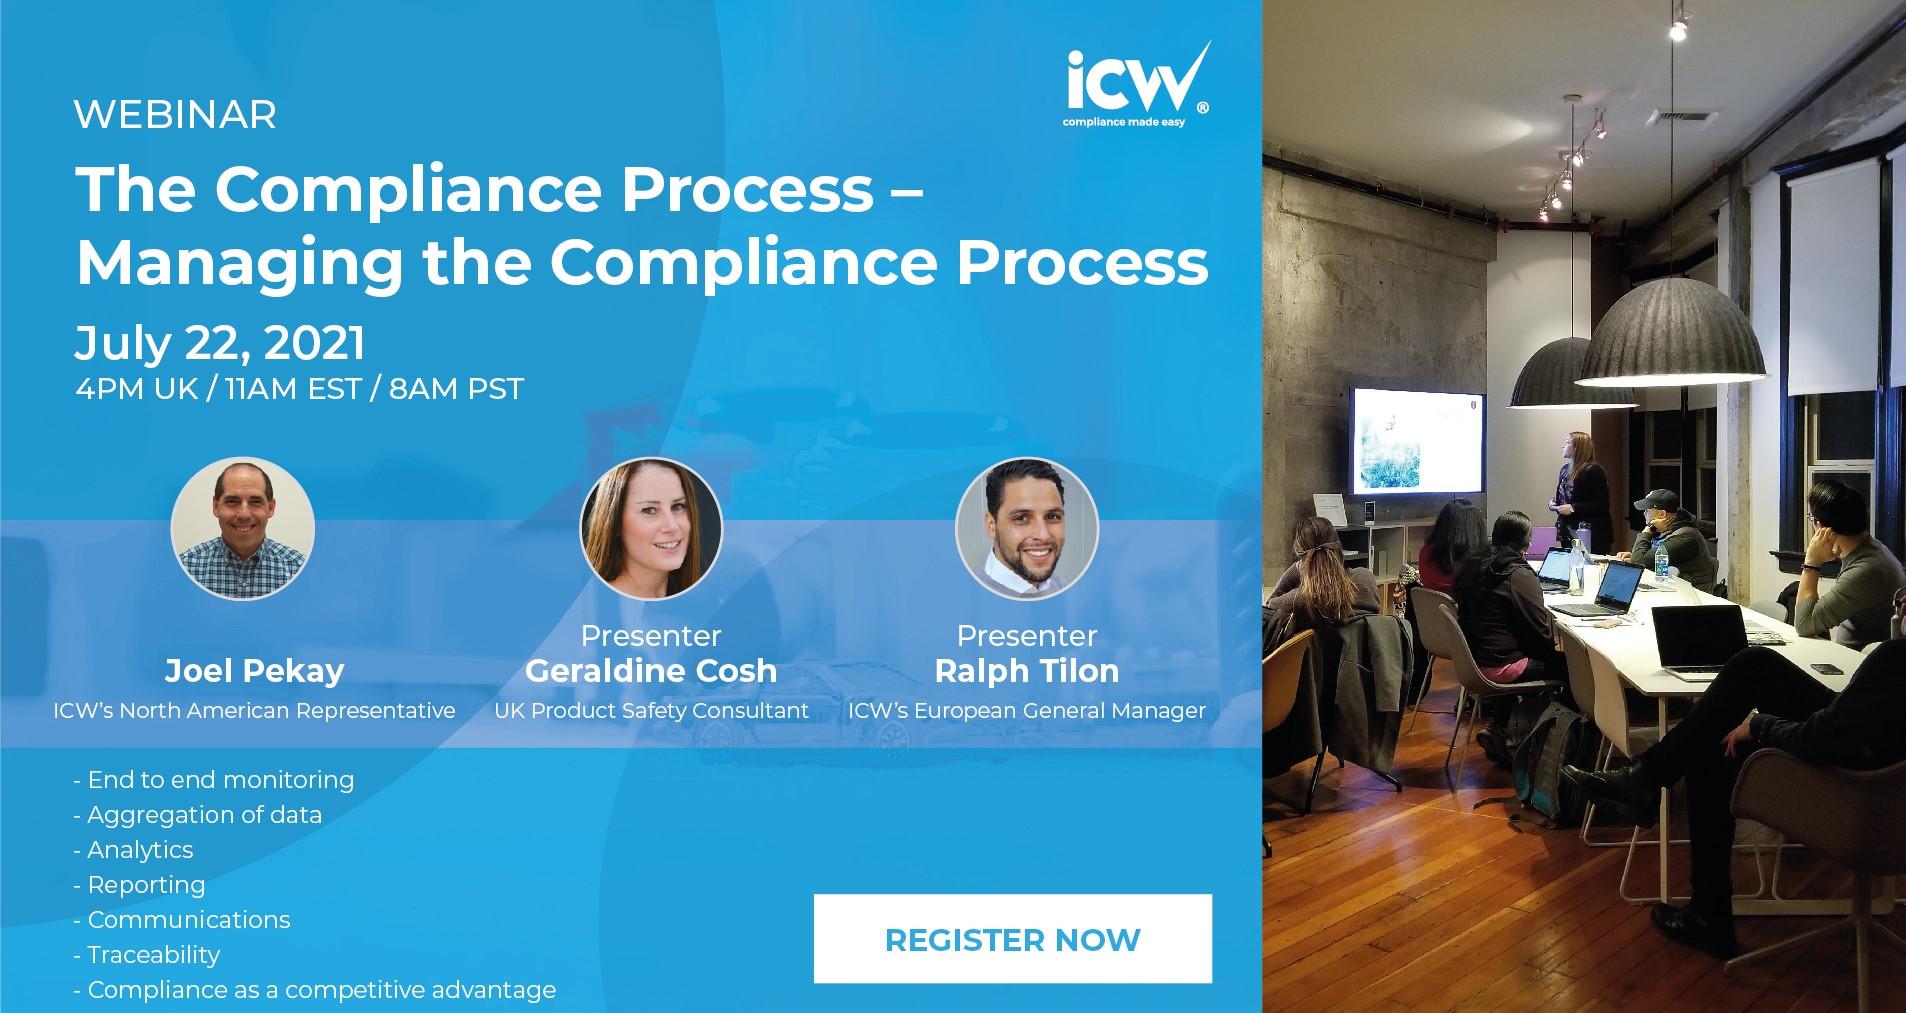 ICW Webinar The Compliance Process - Managing the Compliance Process